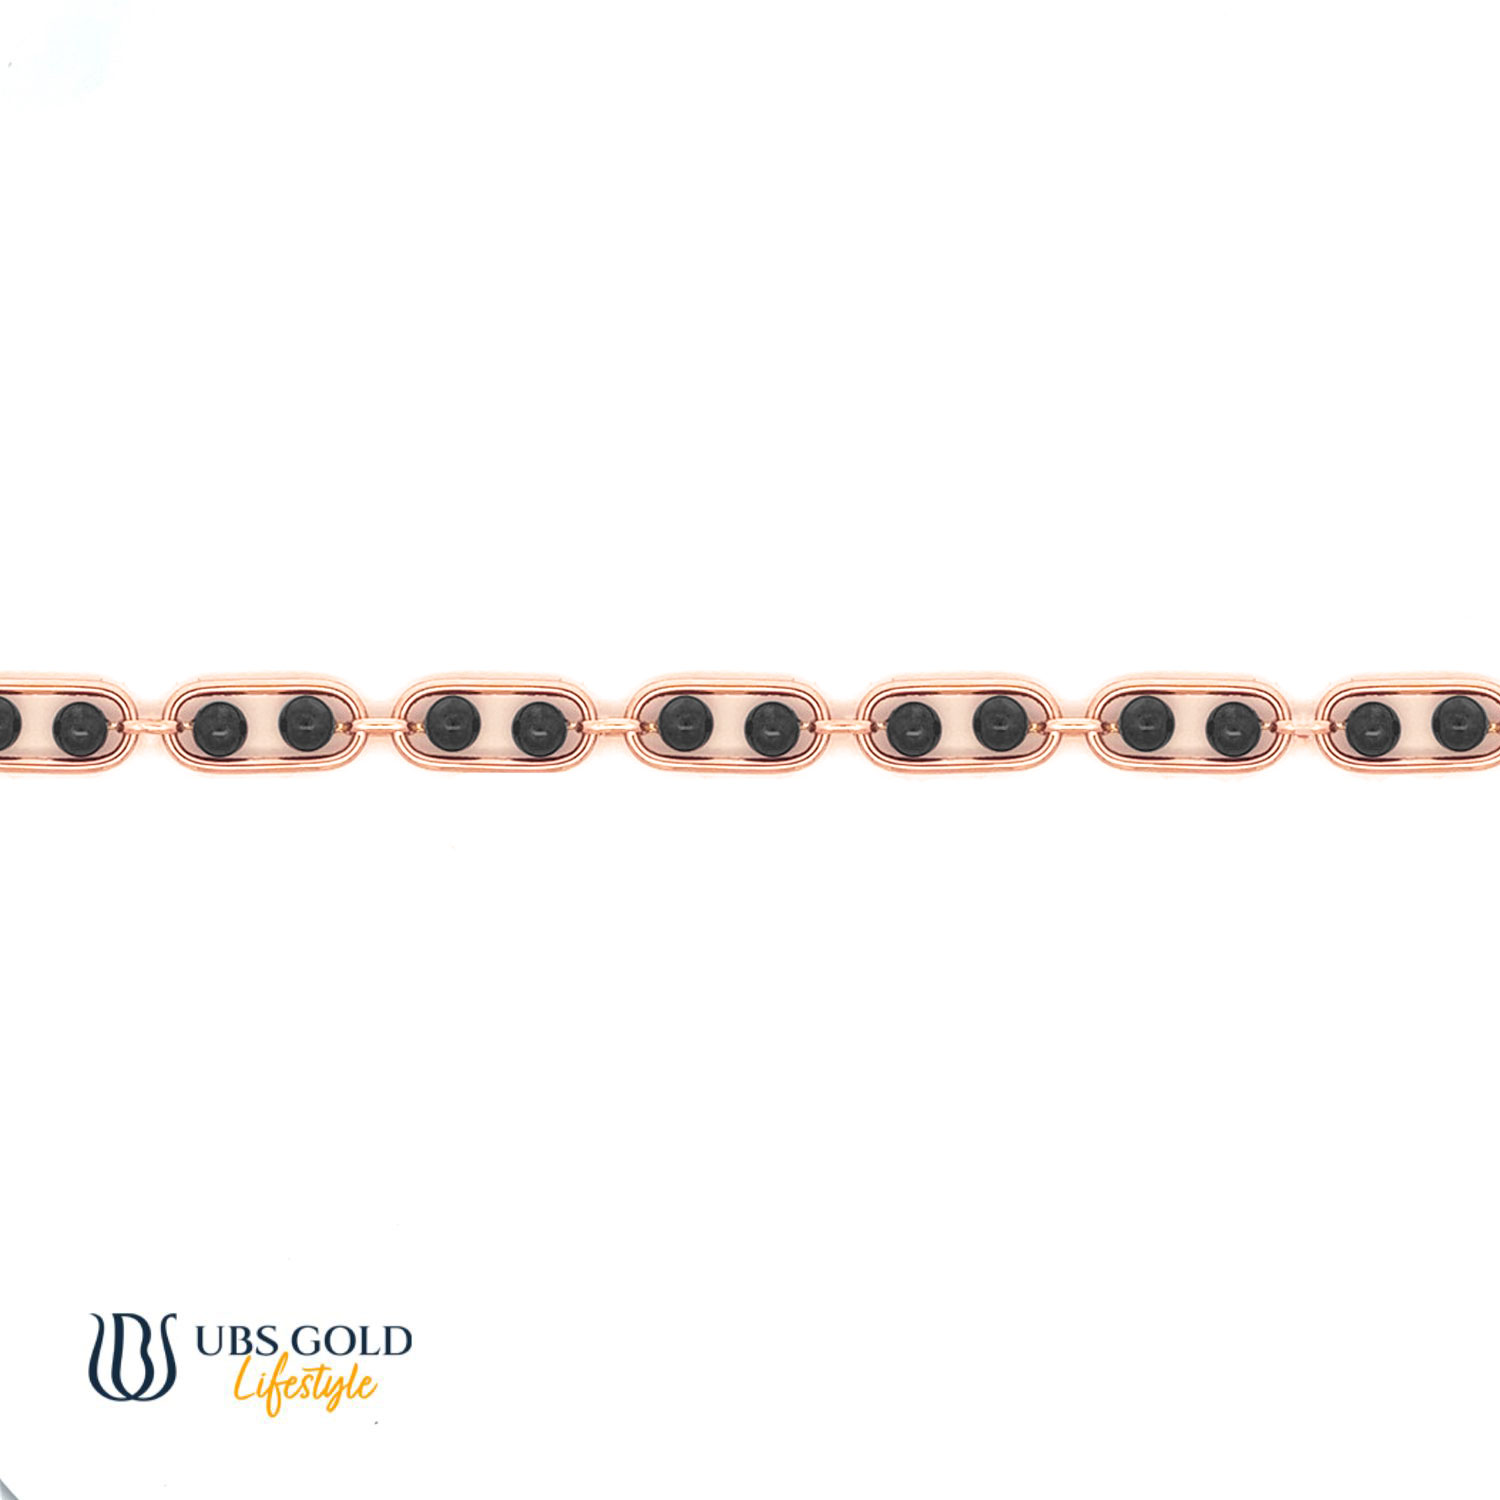 UBS Gold Gelang Emas - Hgv6372 - 17K